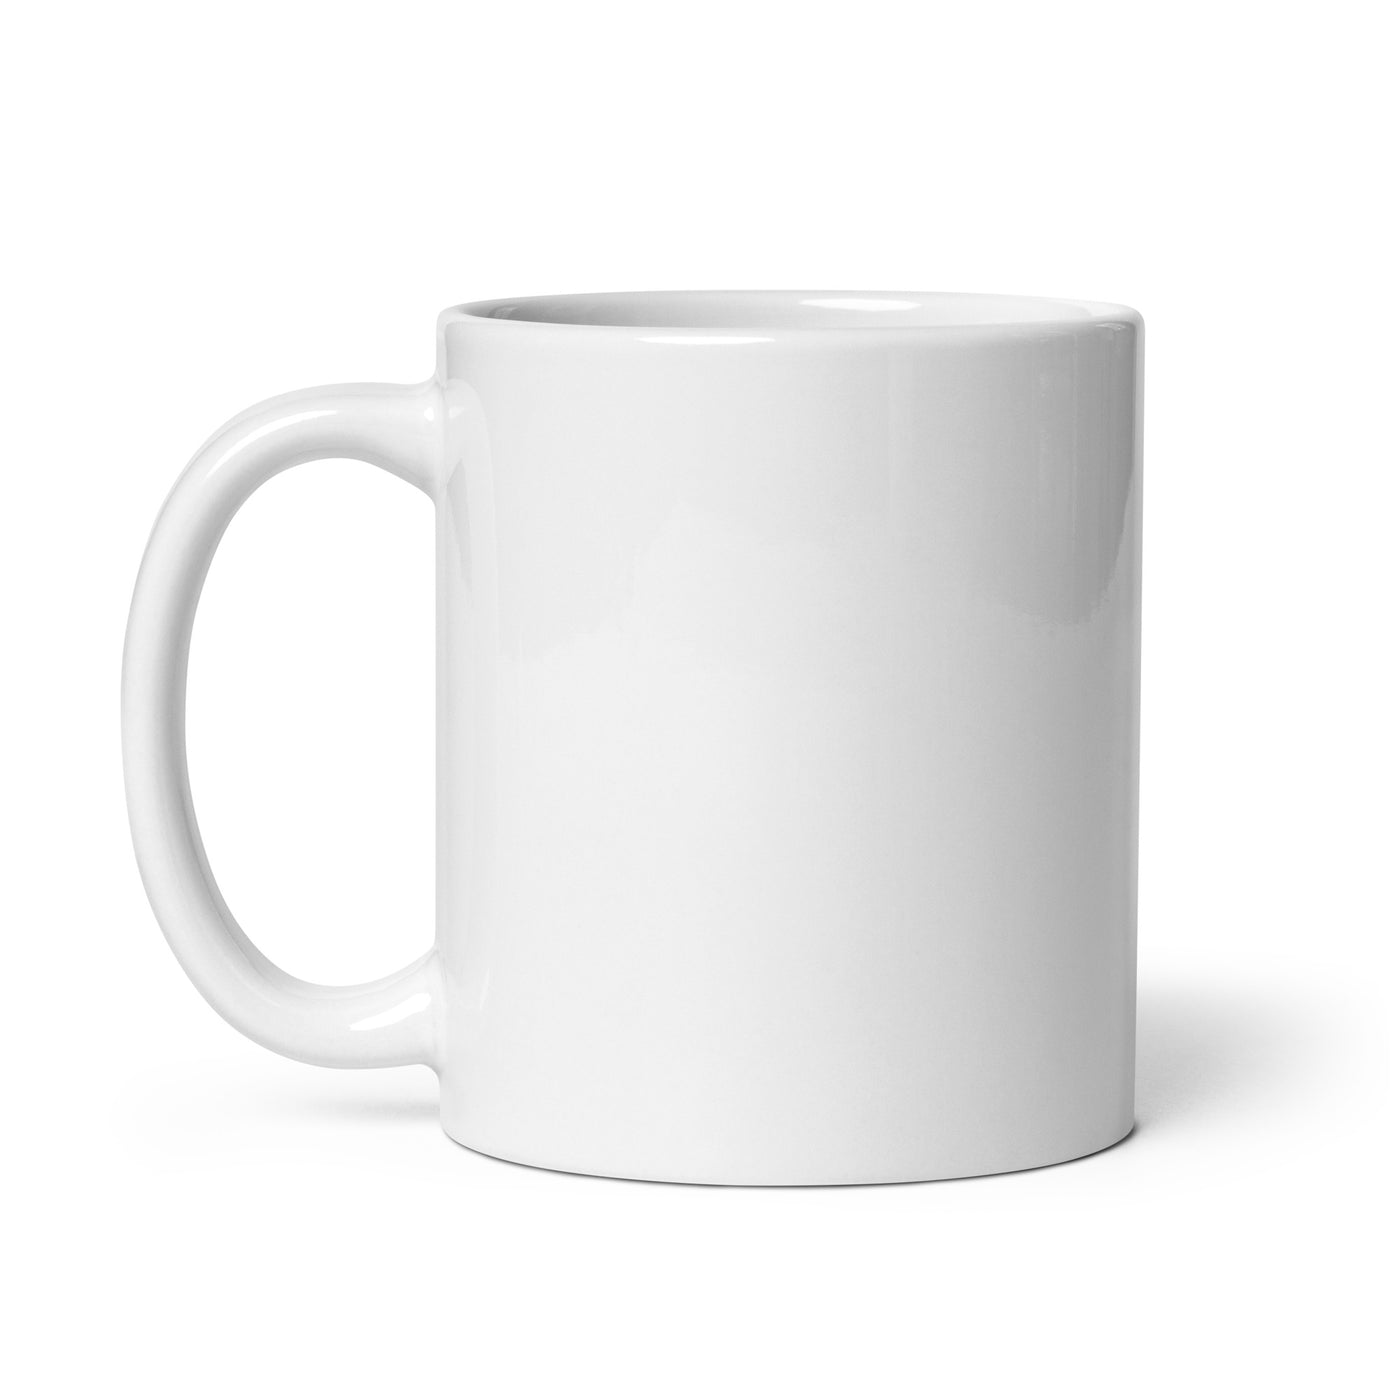 Defygg White glossy mug